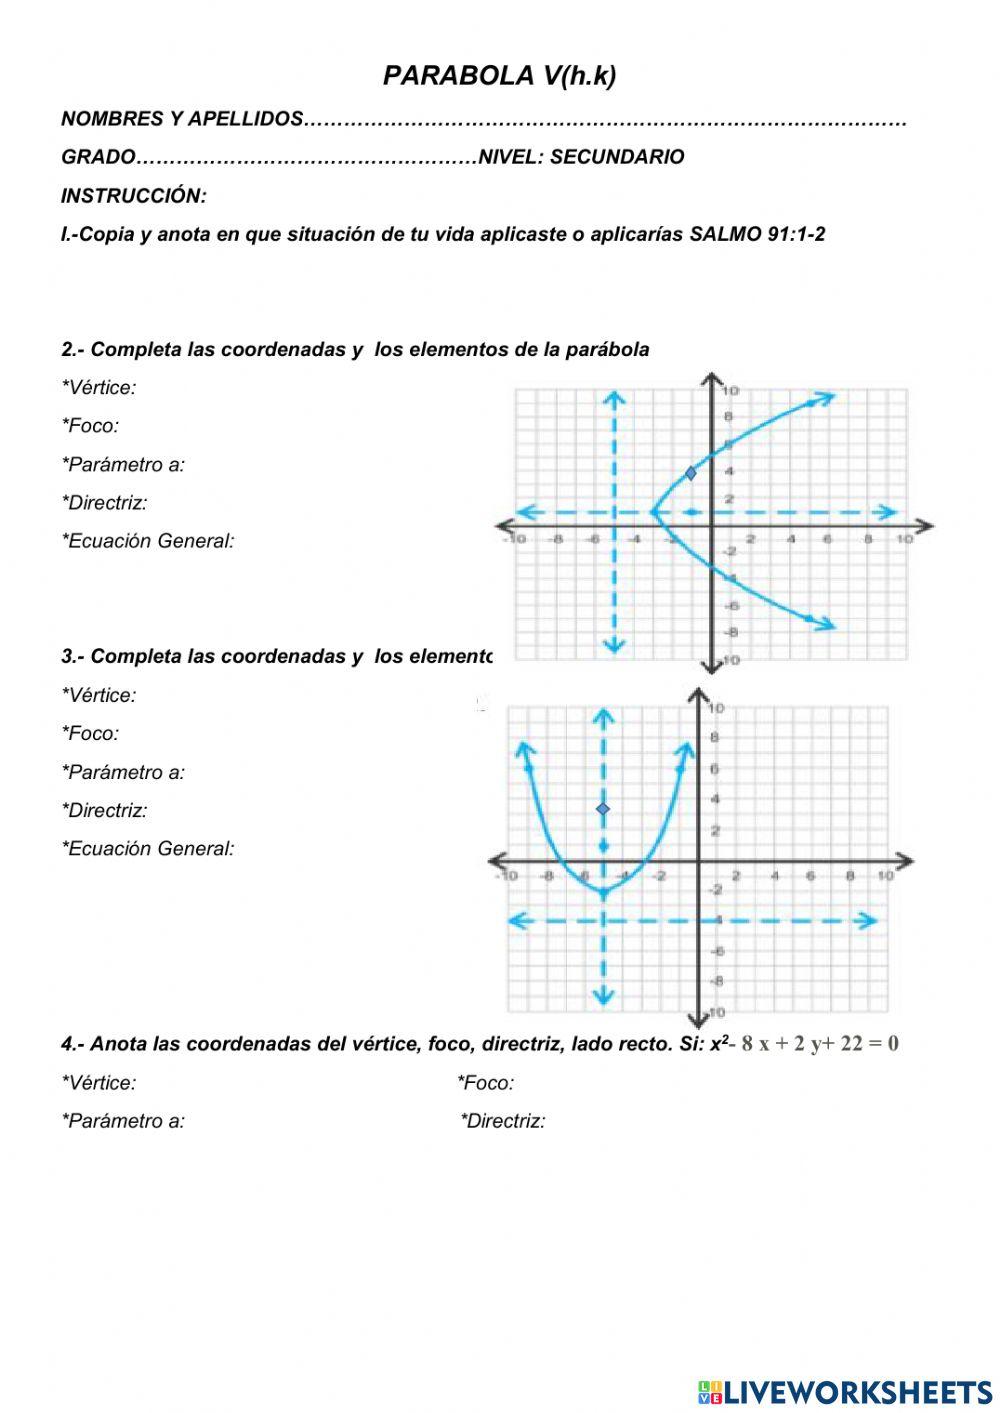 Parabola vertice h,k